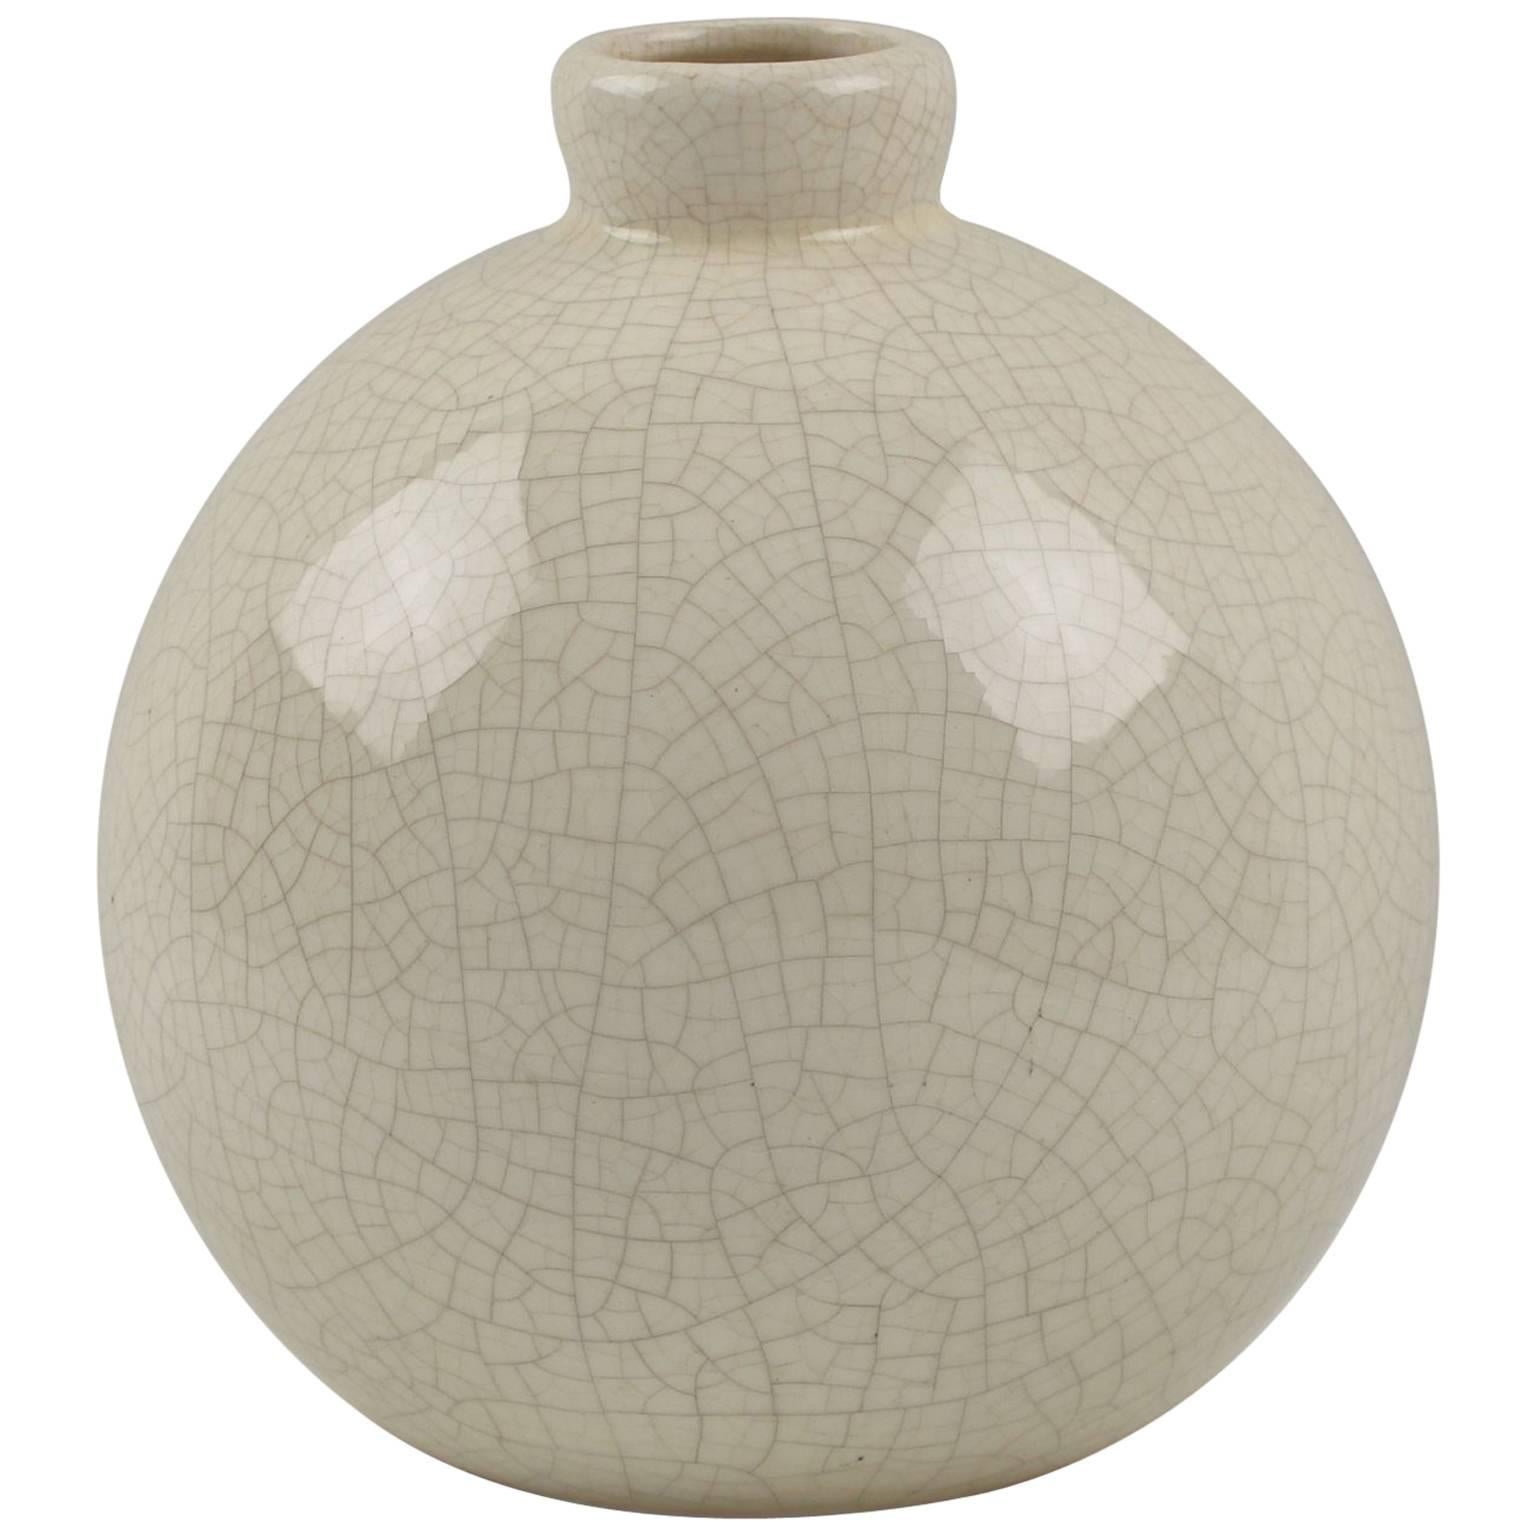 Saint Clement France Art Deco Crackled Glaze Ceramic Pottery Vase